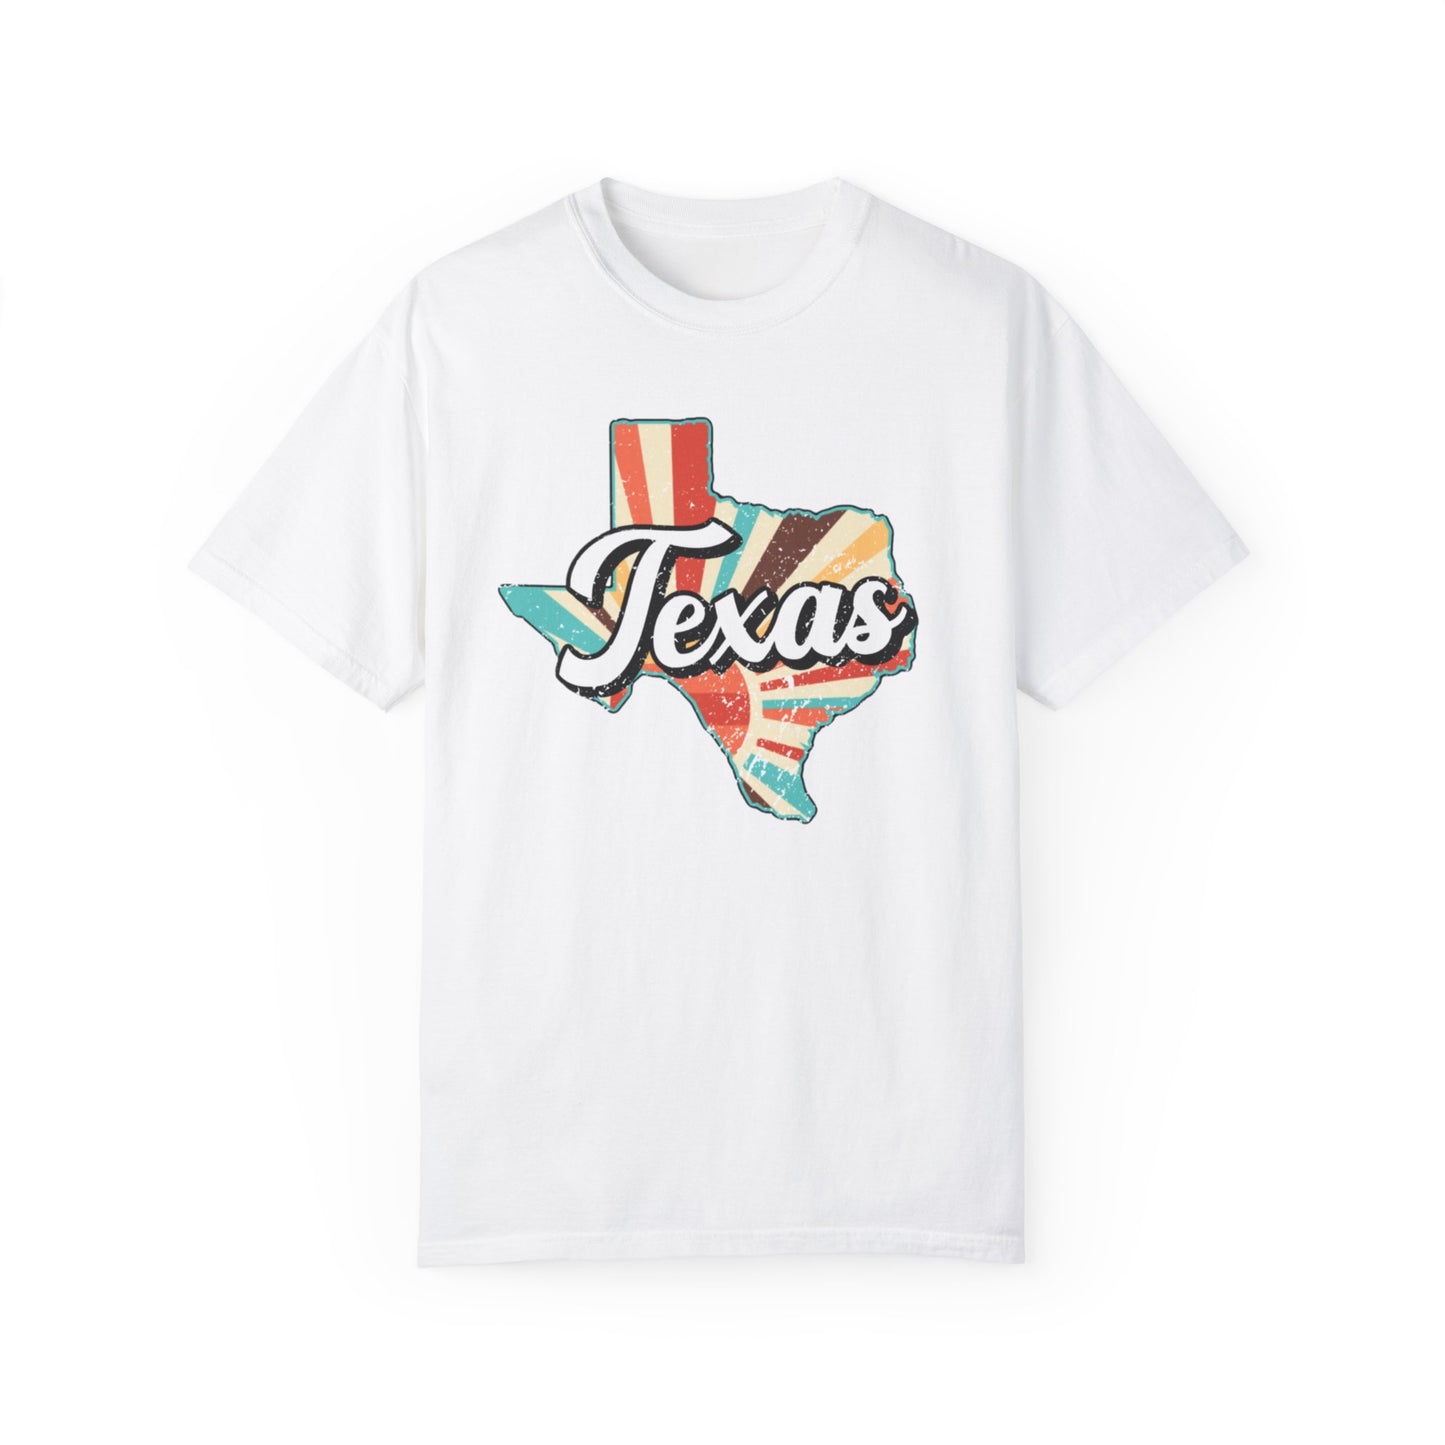 Retro Texas Comfort Colors Tshirt